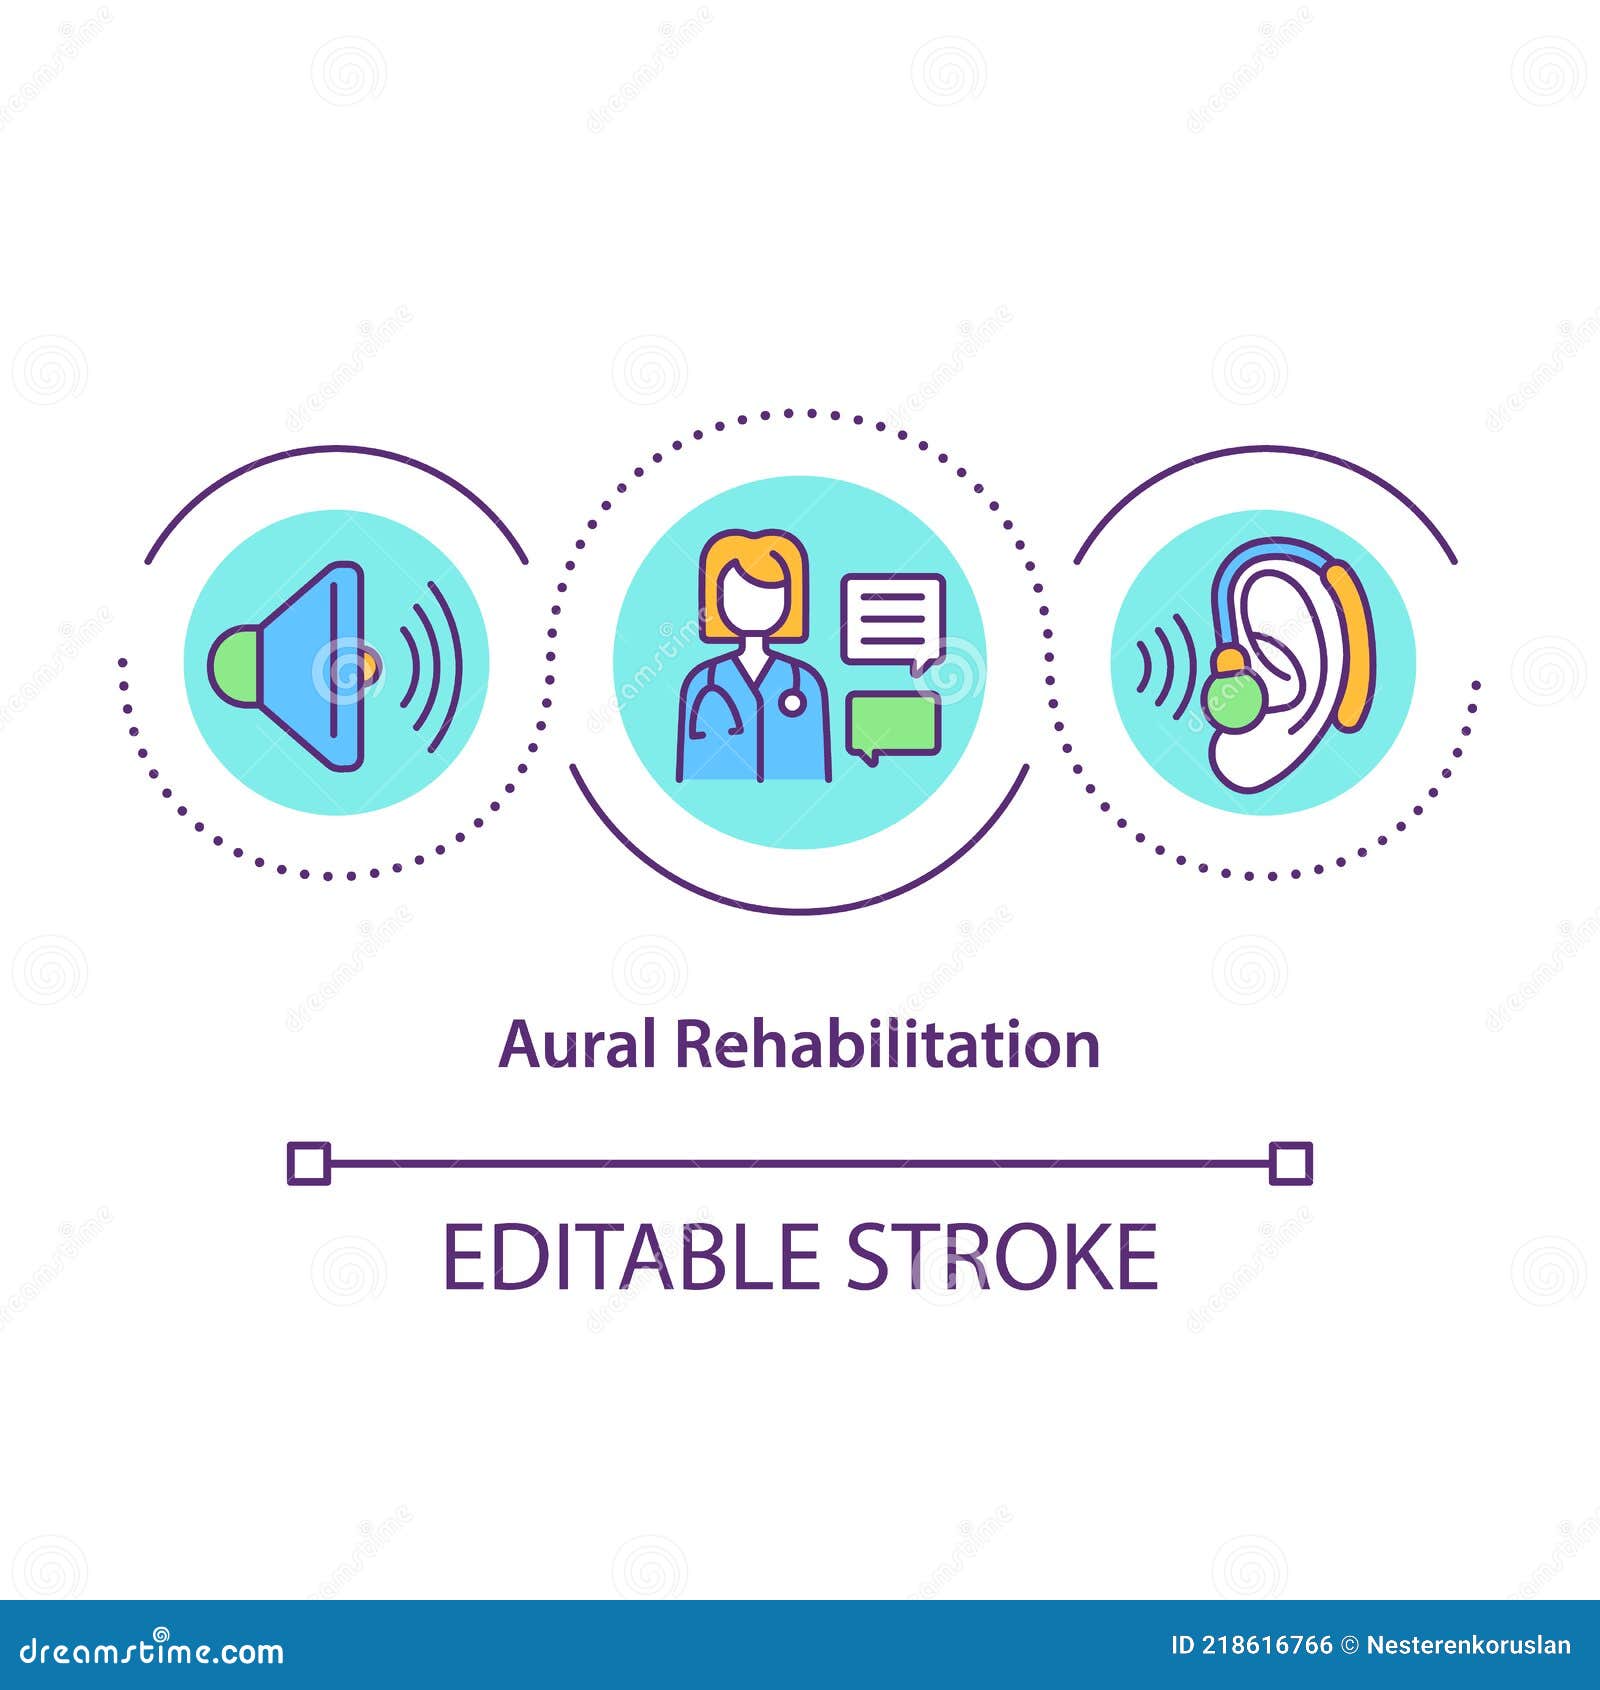 aural rehabilitation concept icon